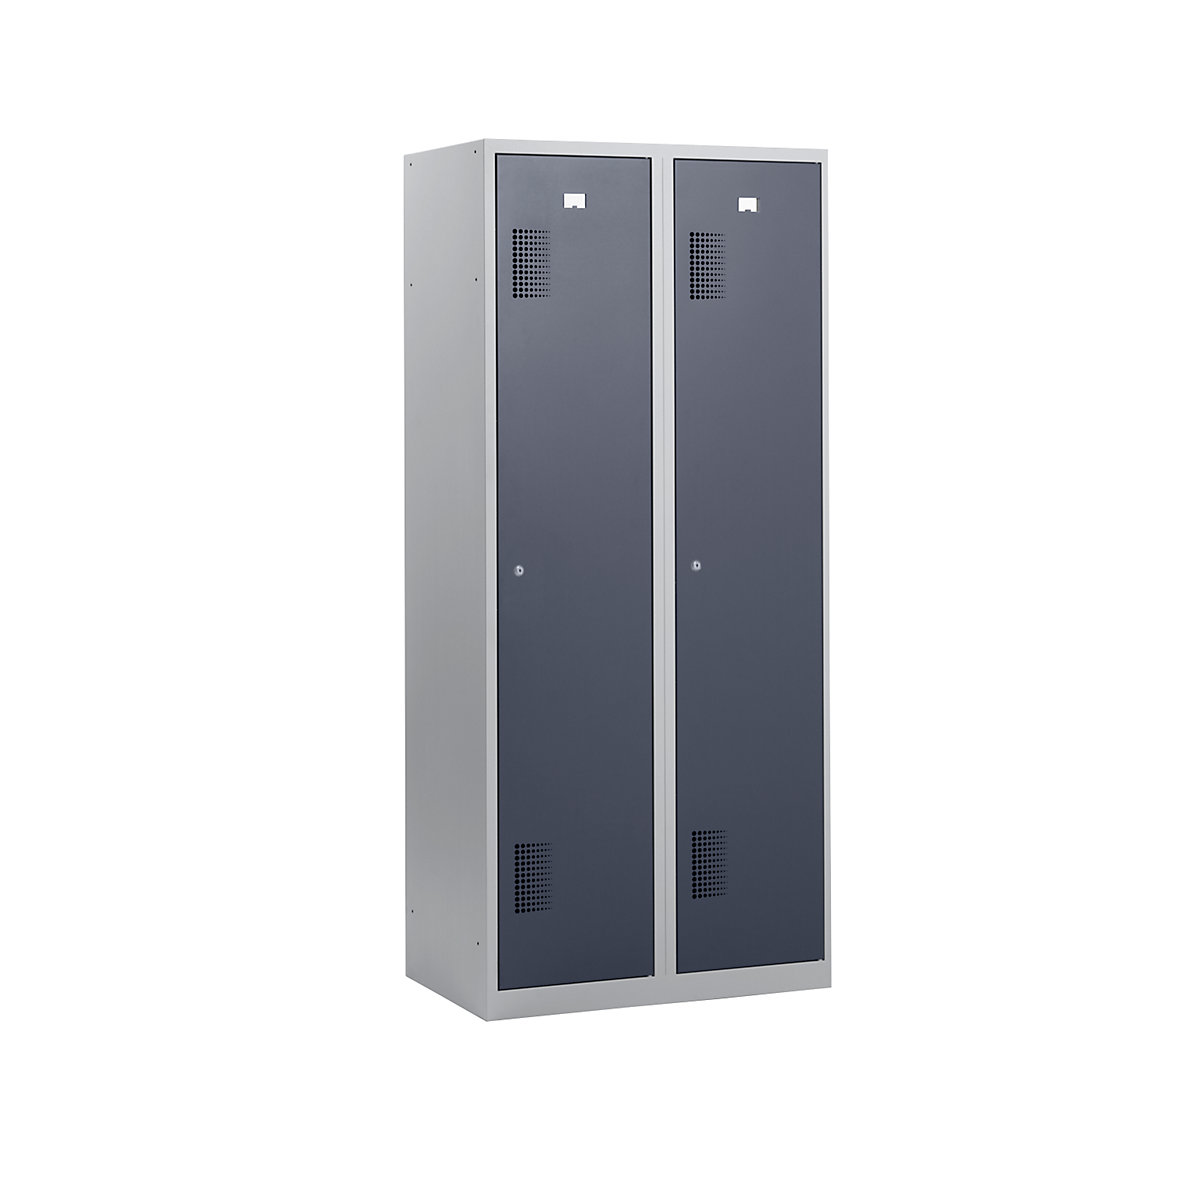 AMSTERDAM cloakroom locker – eurokraft basic, height 1800 mm, width 800 mm, 2 x 398 mm wide compartments, with cylinder lock, light grey body, basalt grey doors-10